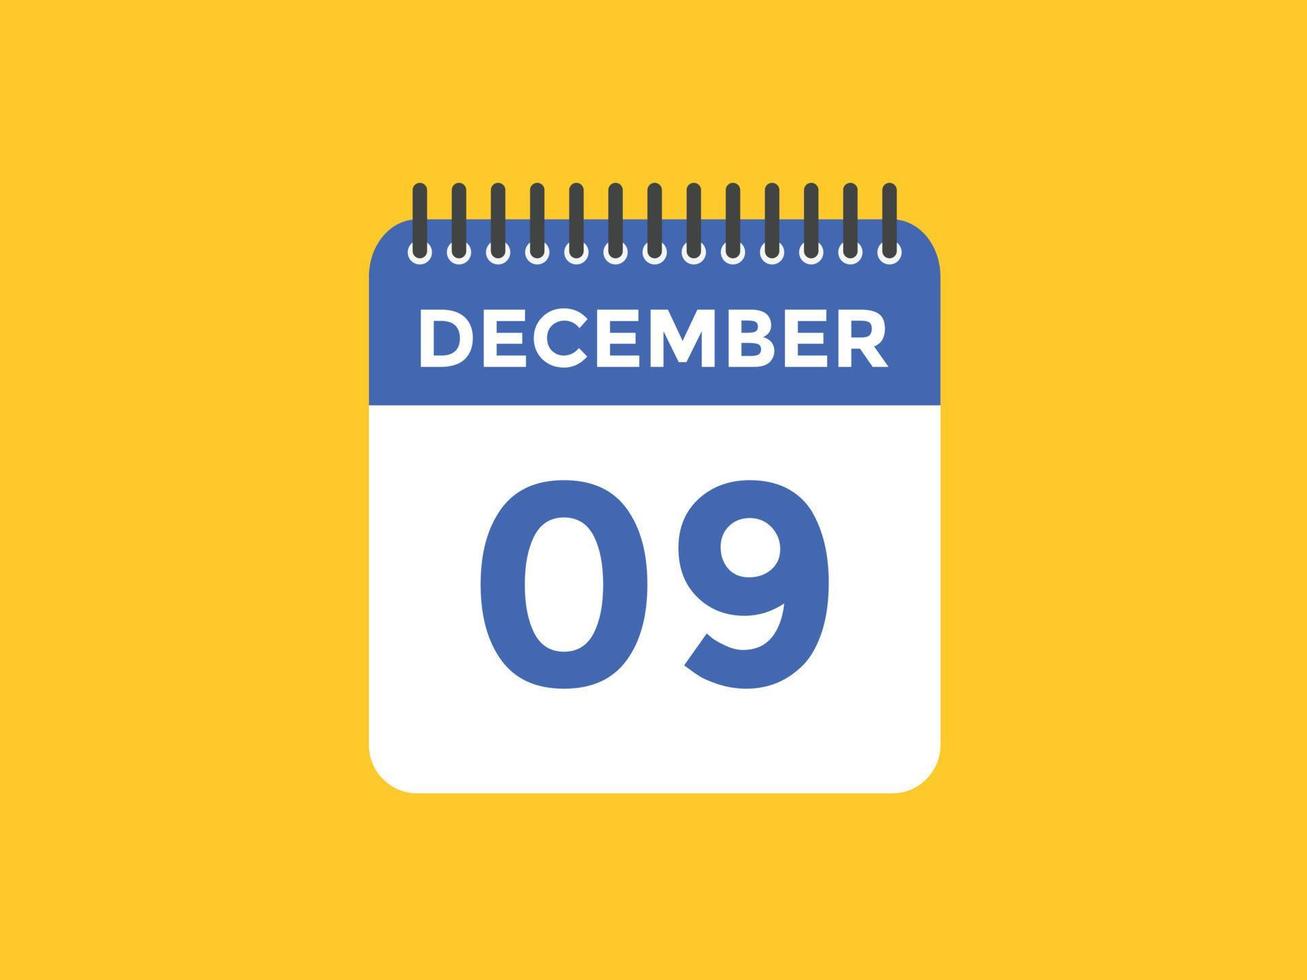 december 9 calendar reminder. 9th december daily calendar icon template. Calendar 9th december icon Design template. Vector illustration